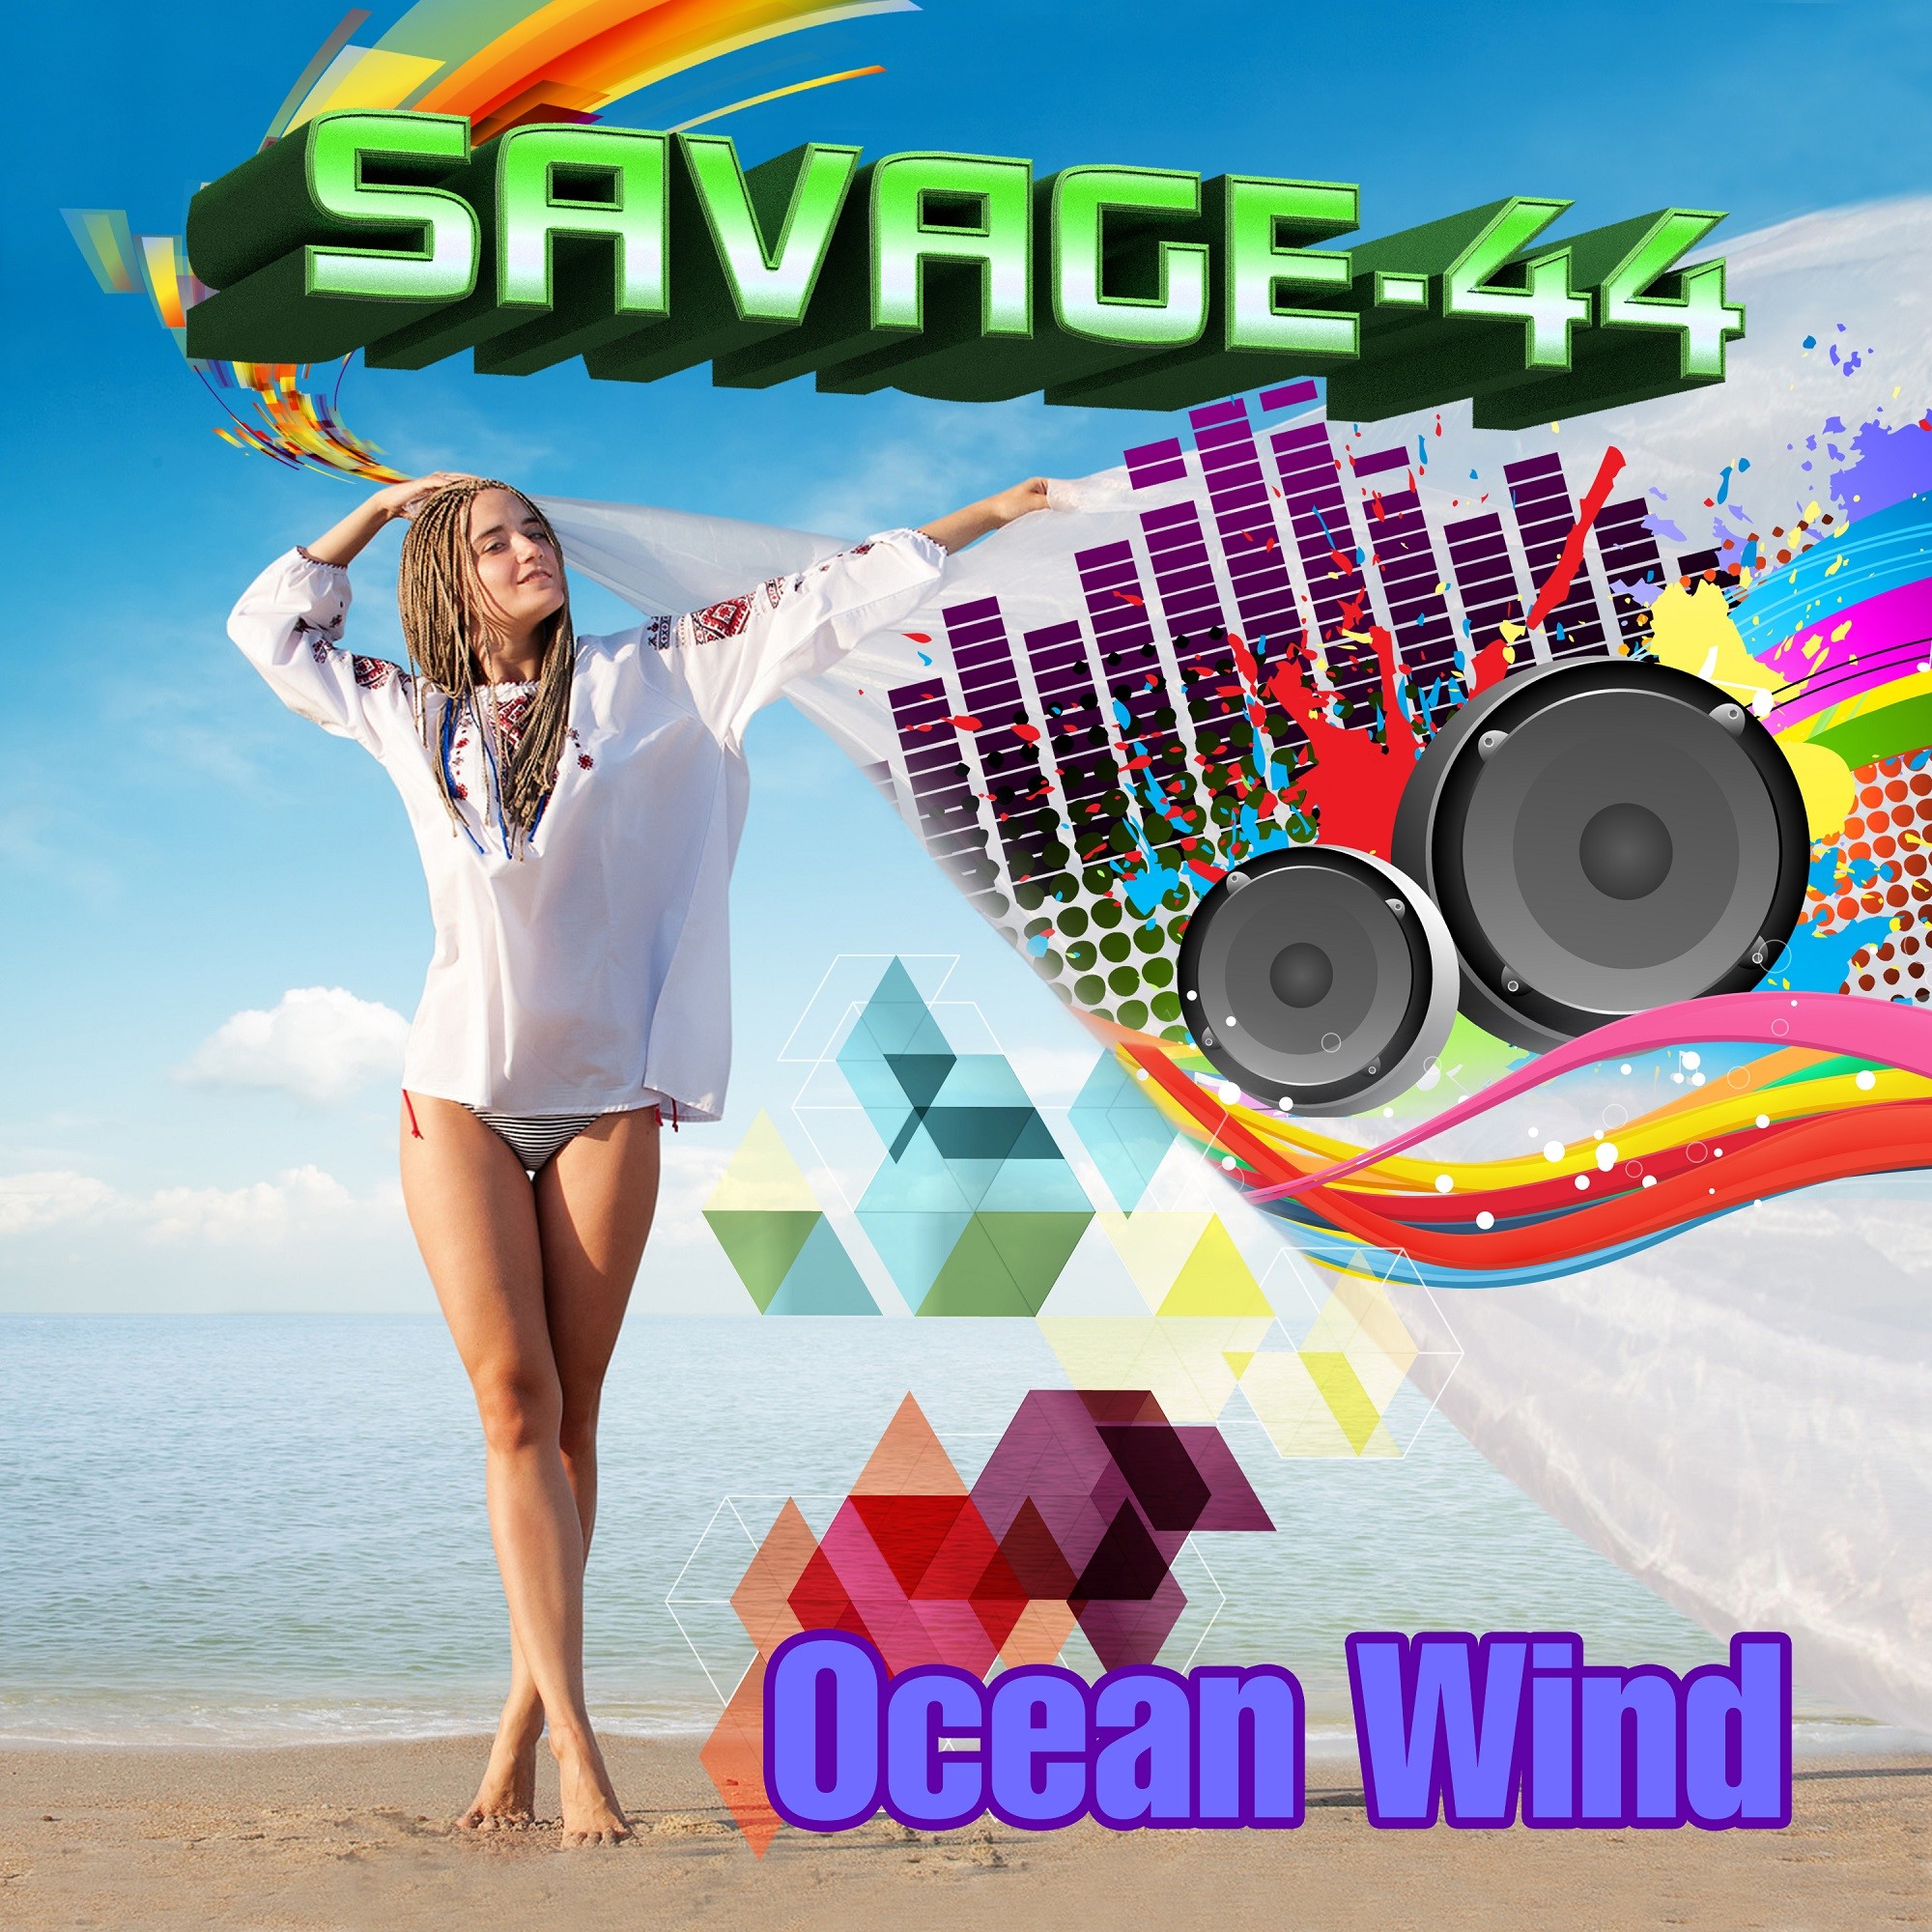 Savage 44 the music ring. Savage 44. Savage-44 - City Light New Eurodance Hit 2024. Savage-44 - Ocean Wind (Top Deep House Hit). Savage-44 - City Light.